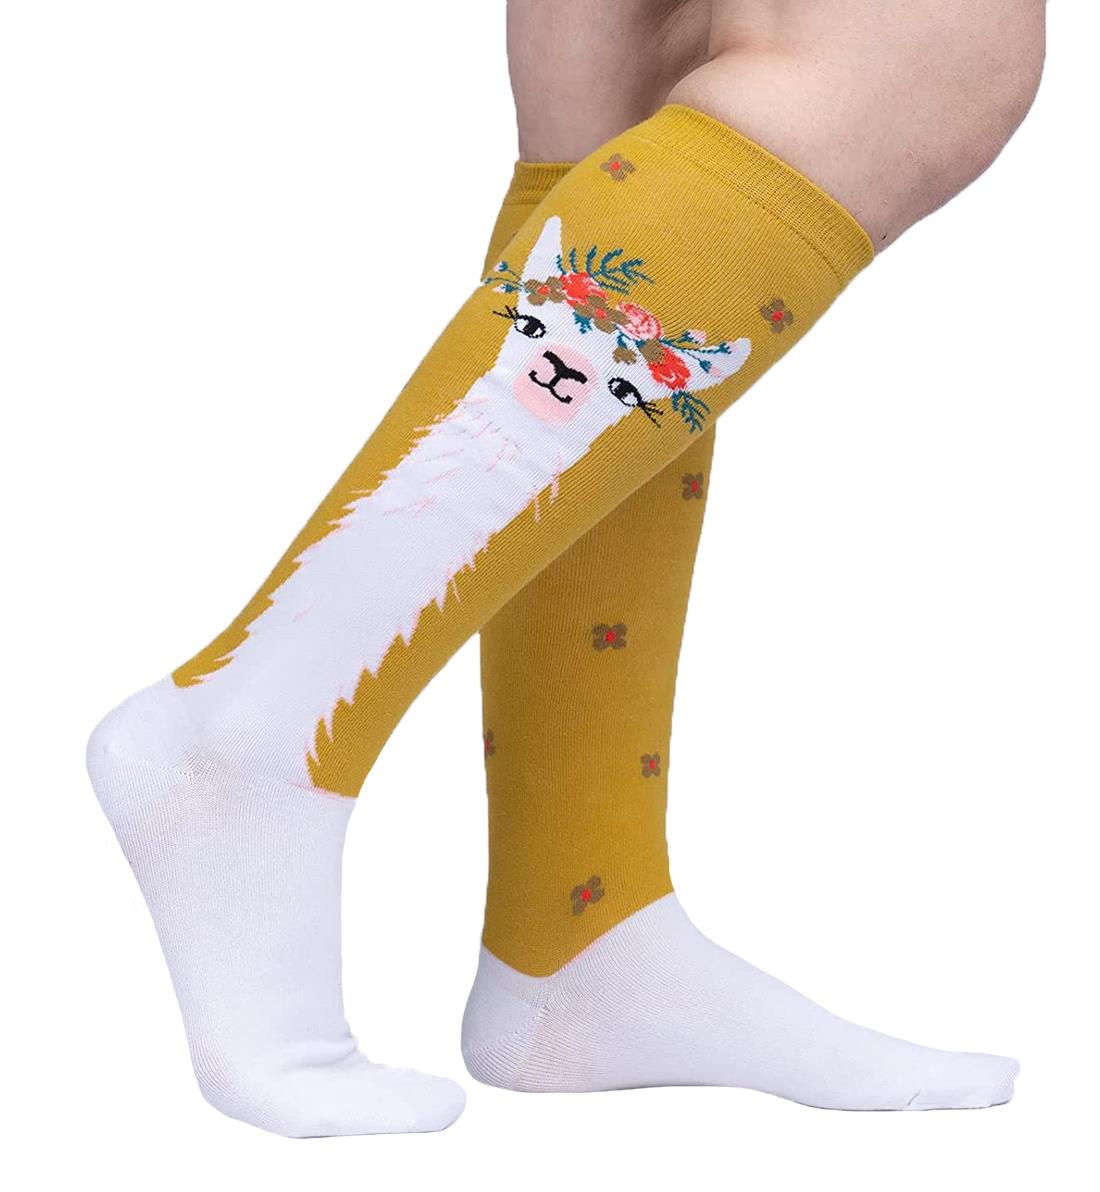 SOCK it to me Unisex Knee High Socks (F0583),Llama Queen - Llama Queen,One Size